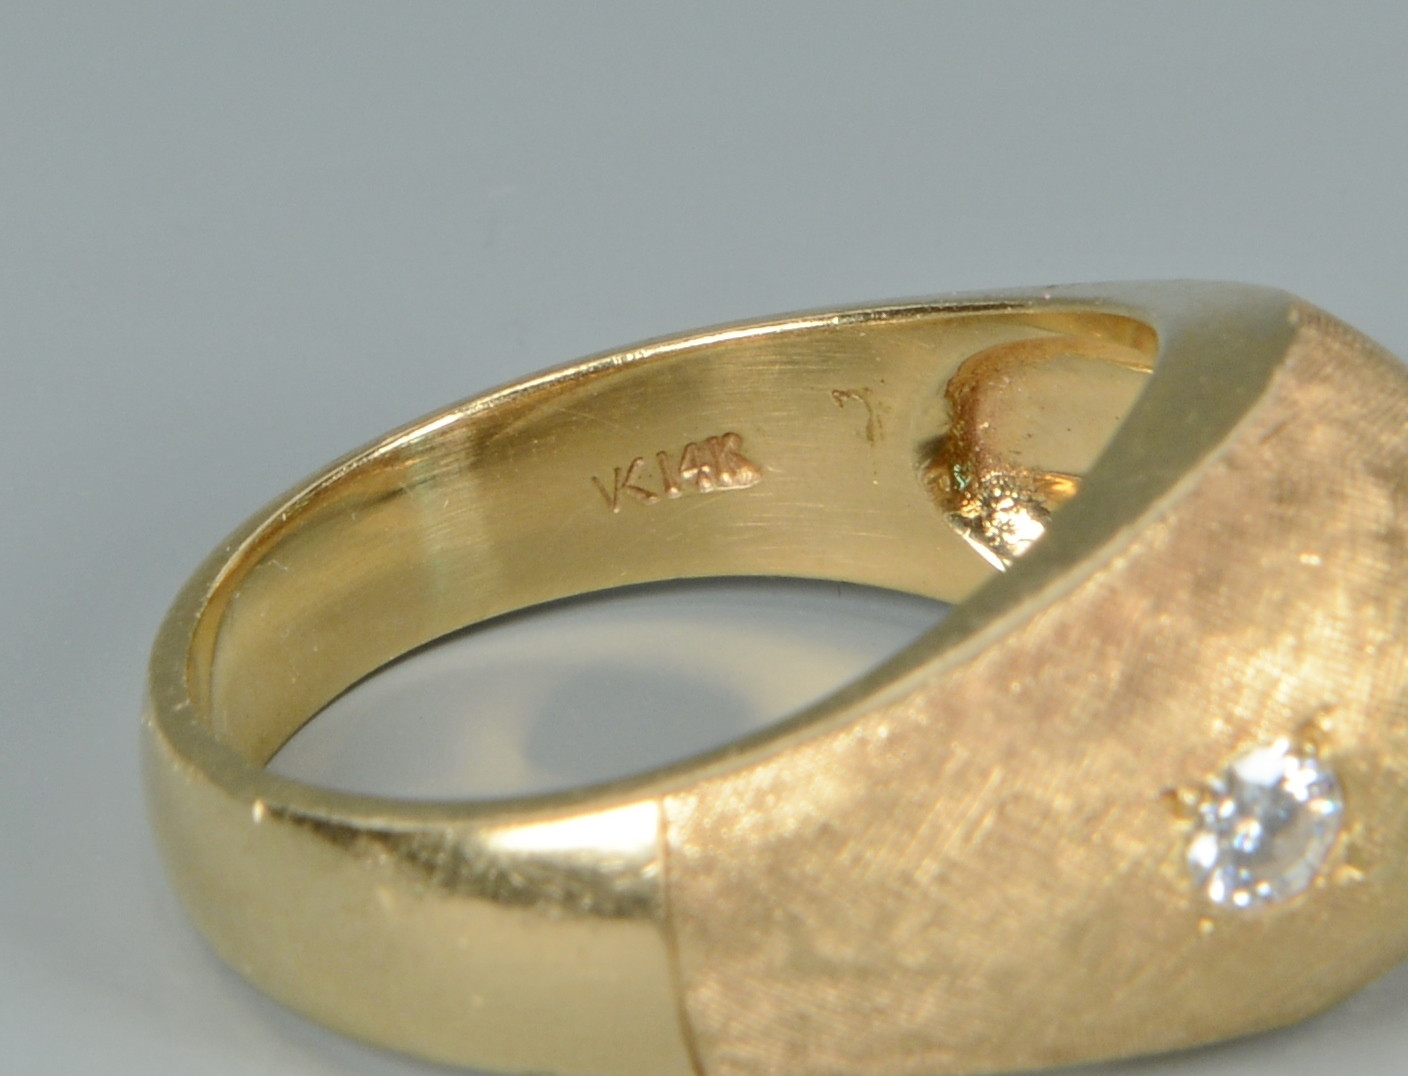 Lot 259: 14k Emerald and Diamond Ring